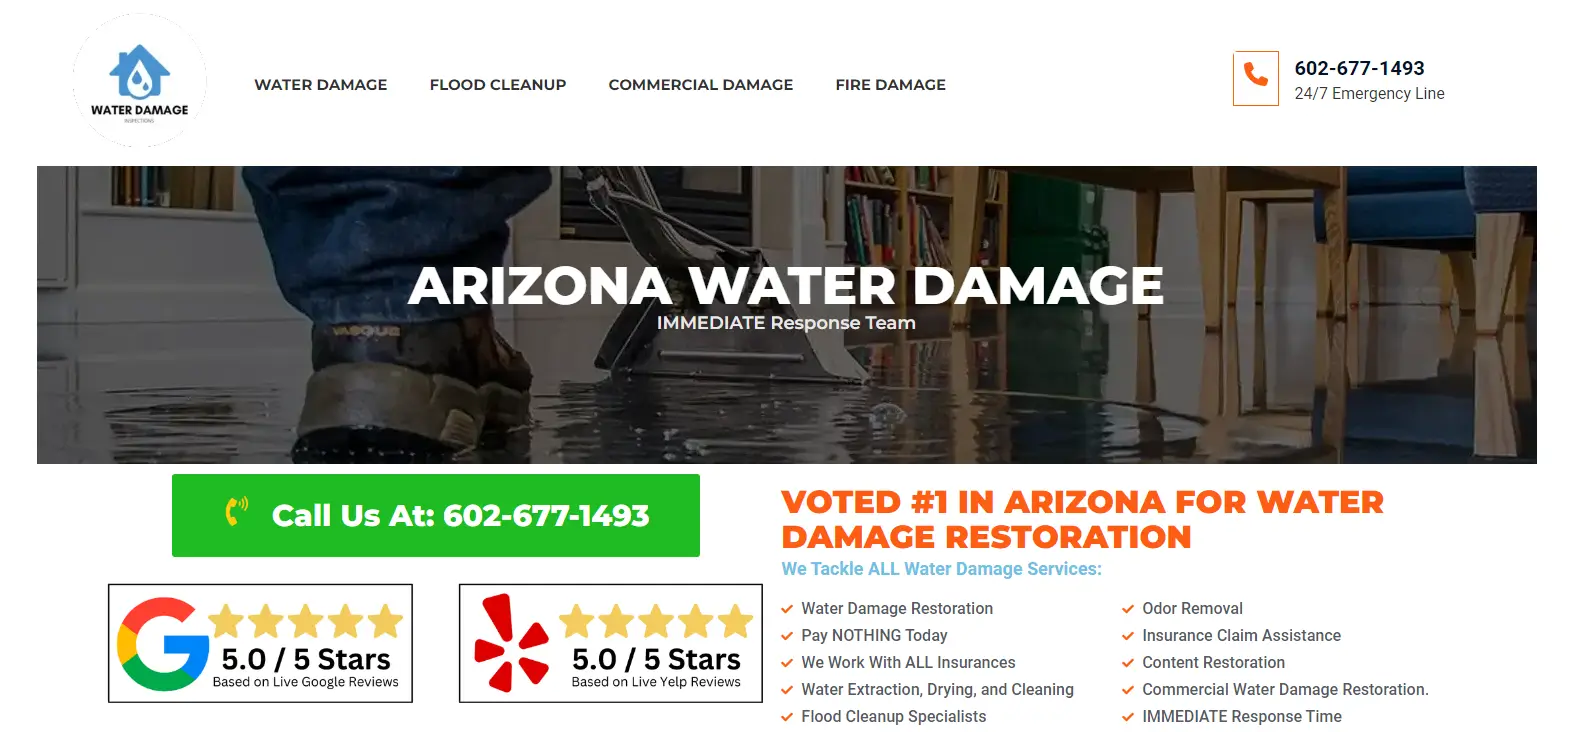 Water Damage Inspections in AZ